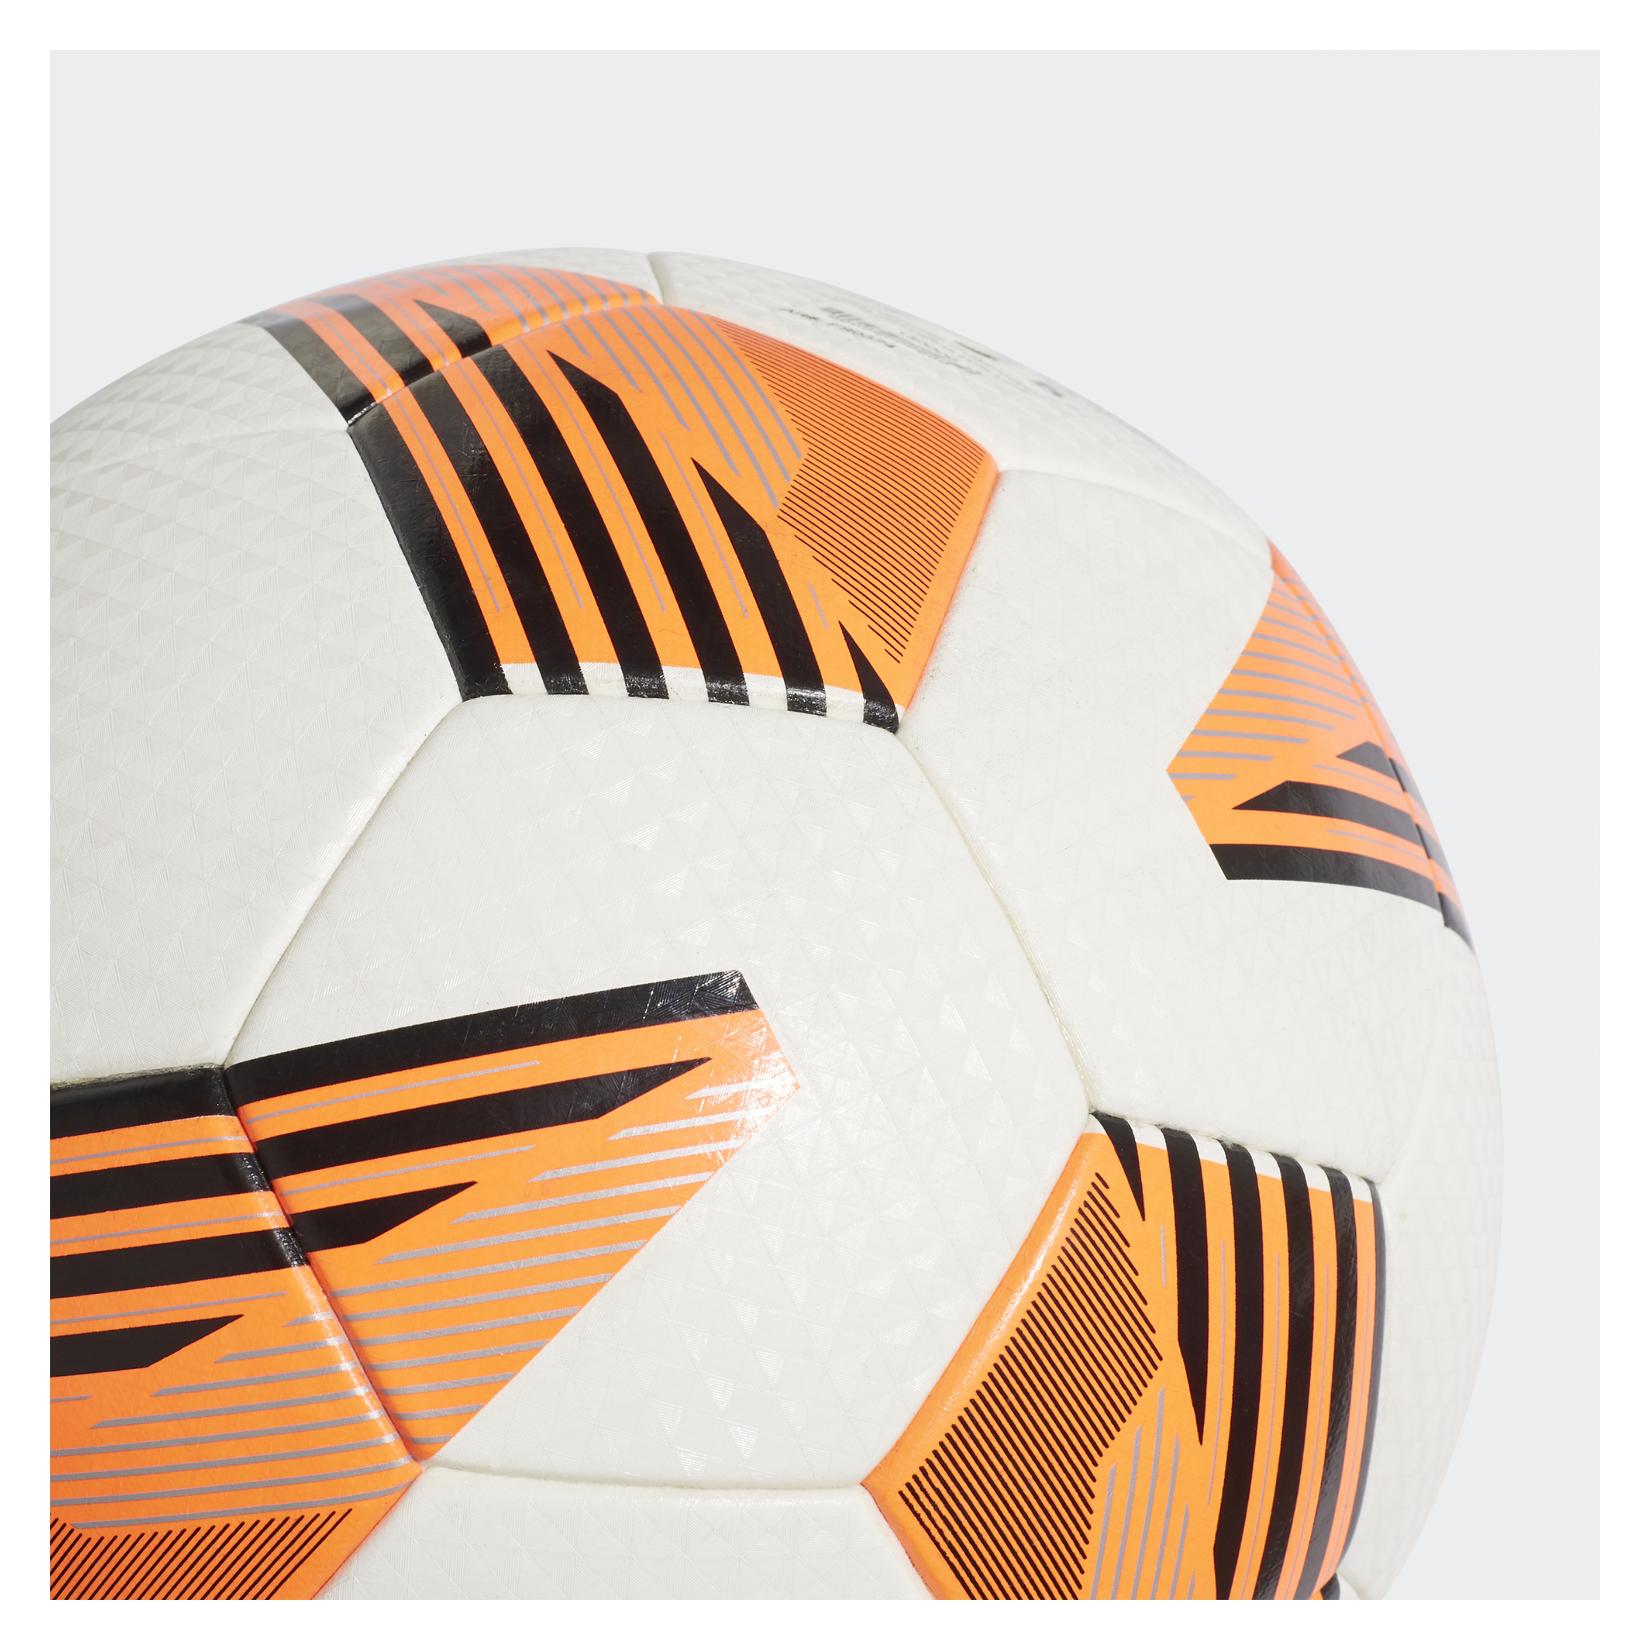 Adidas Tiro League TB Ball - IMS Match Football